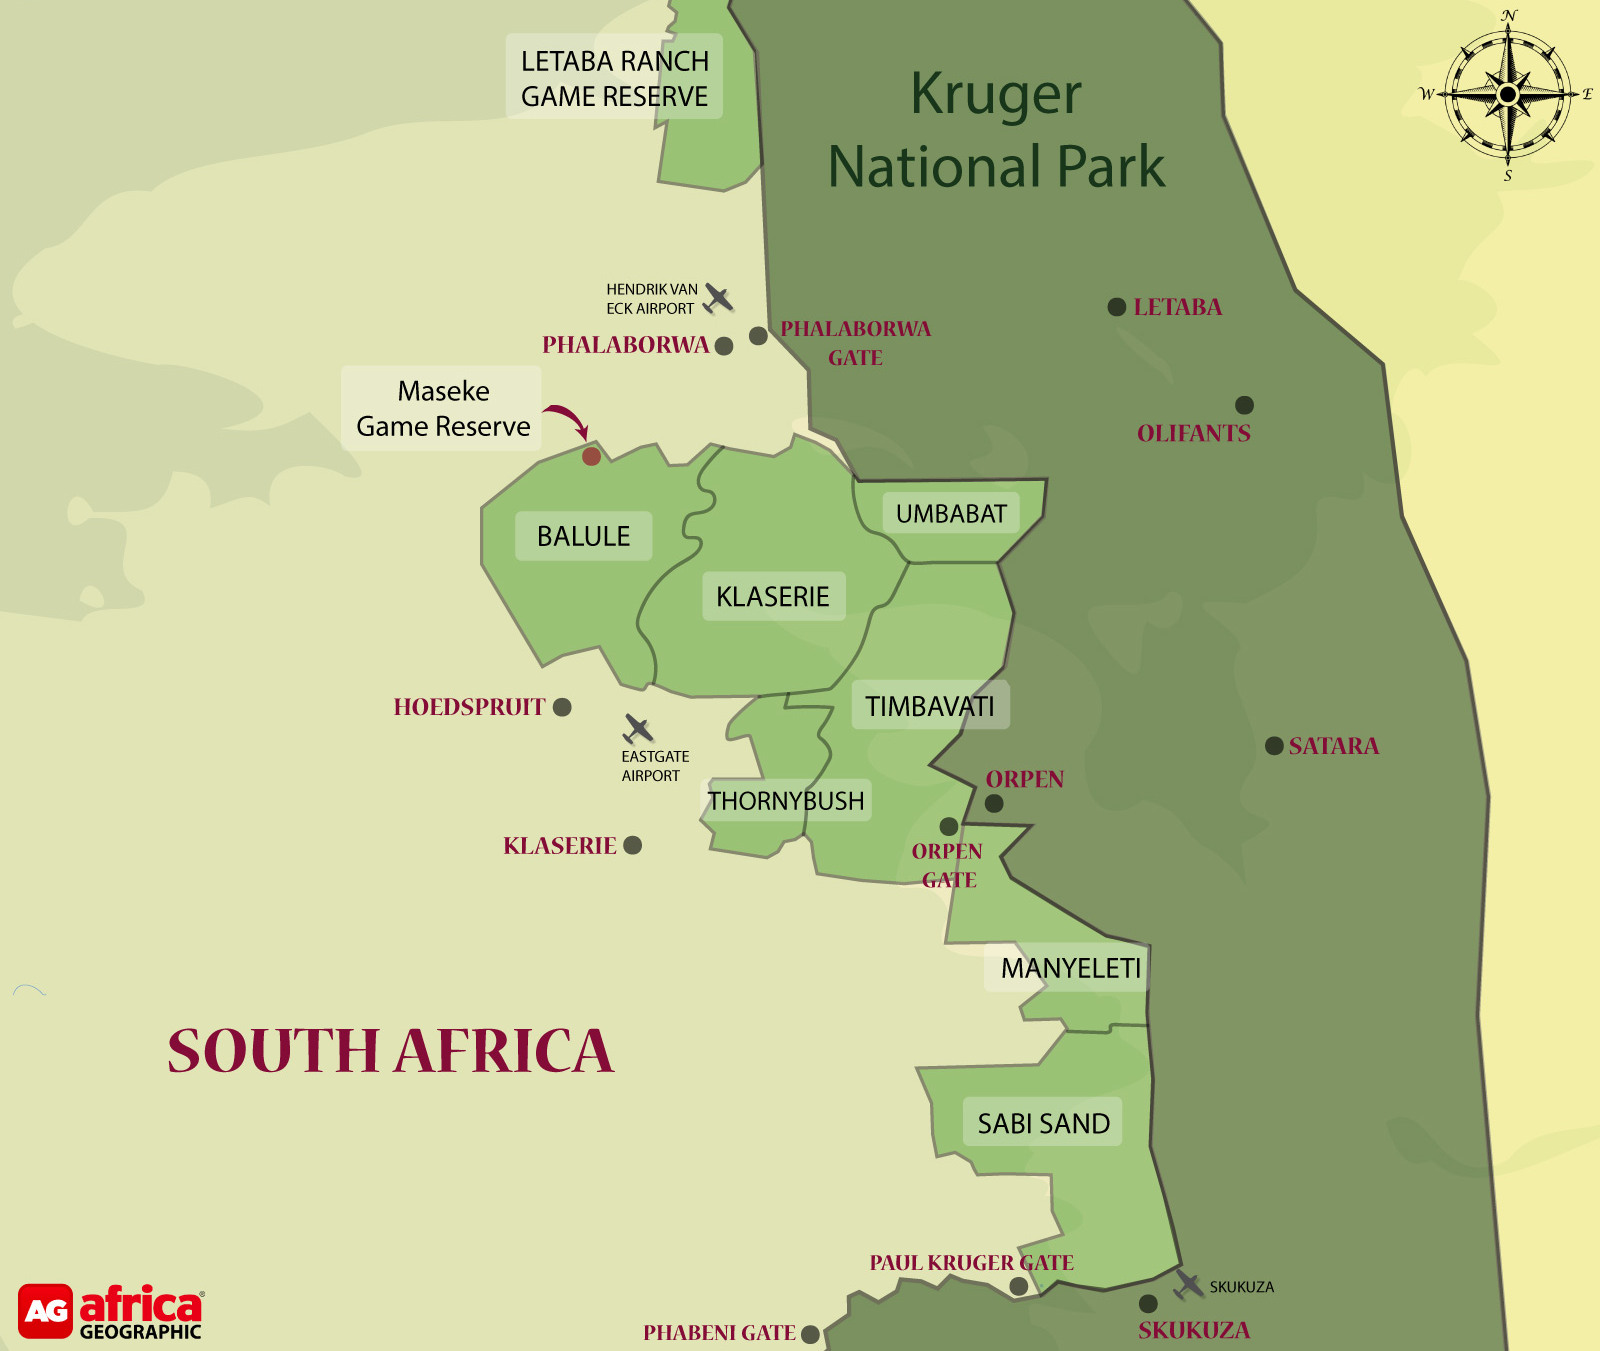 Maseke Game Reserve in Balule, Greater Kruger, South Africa